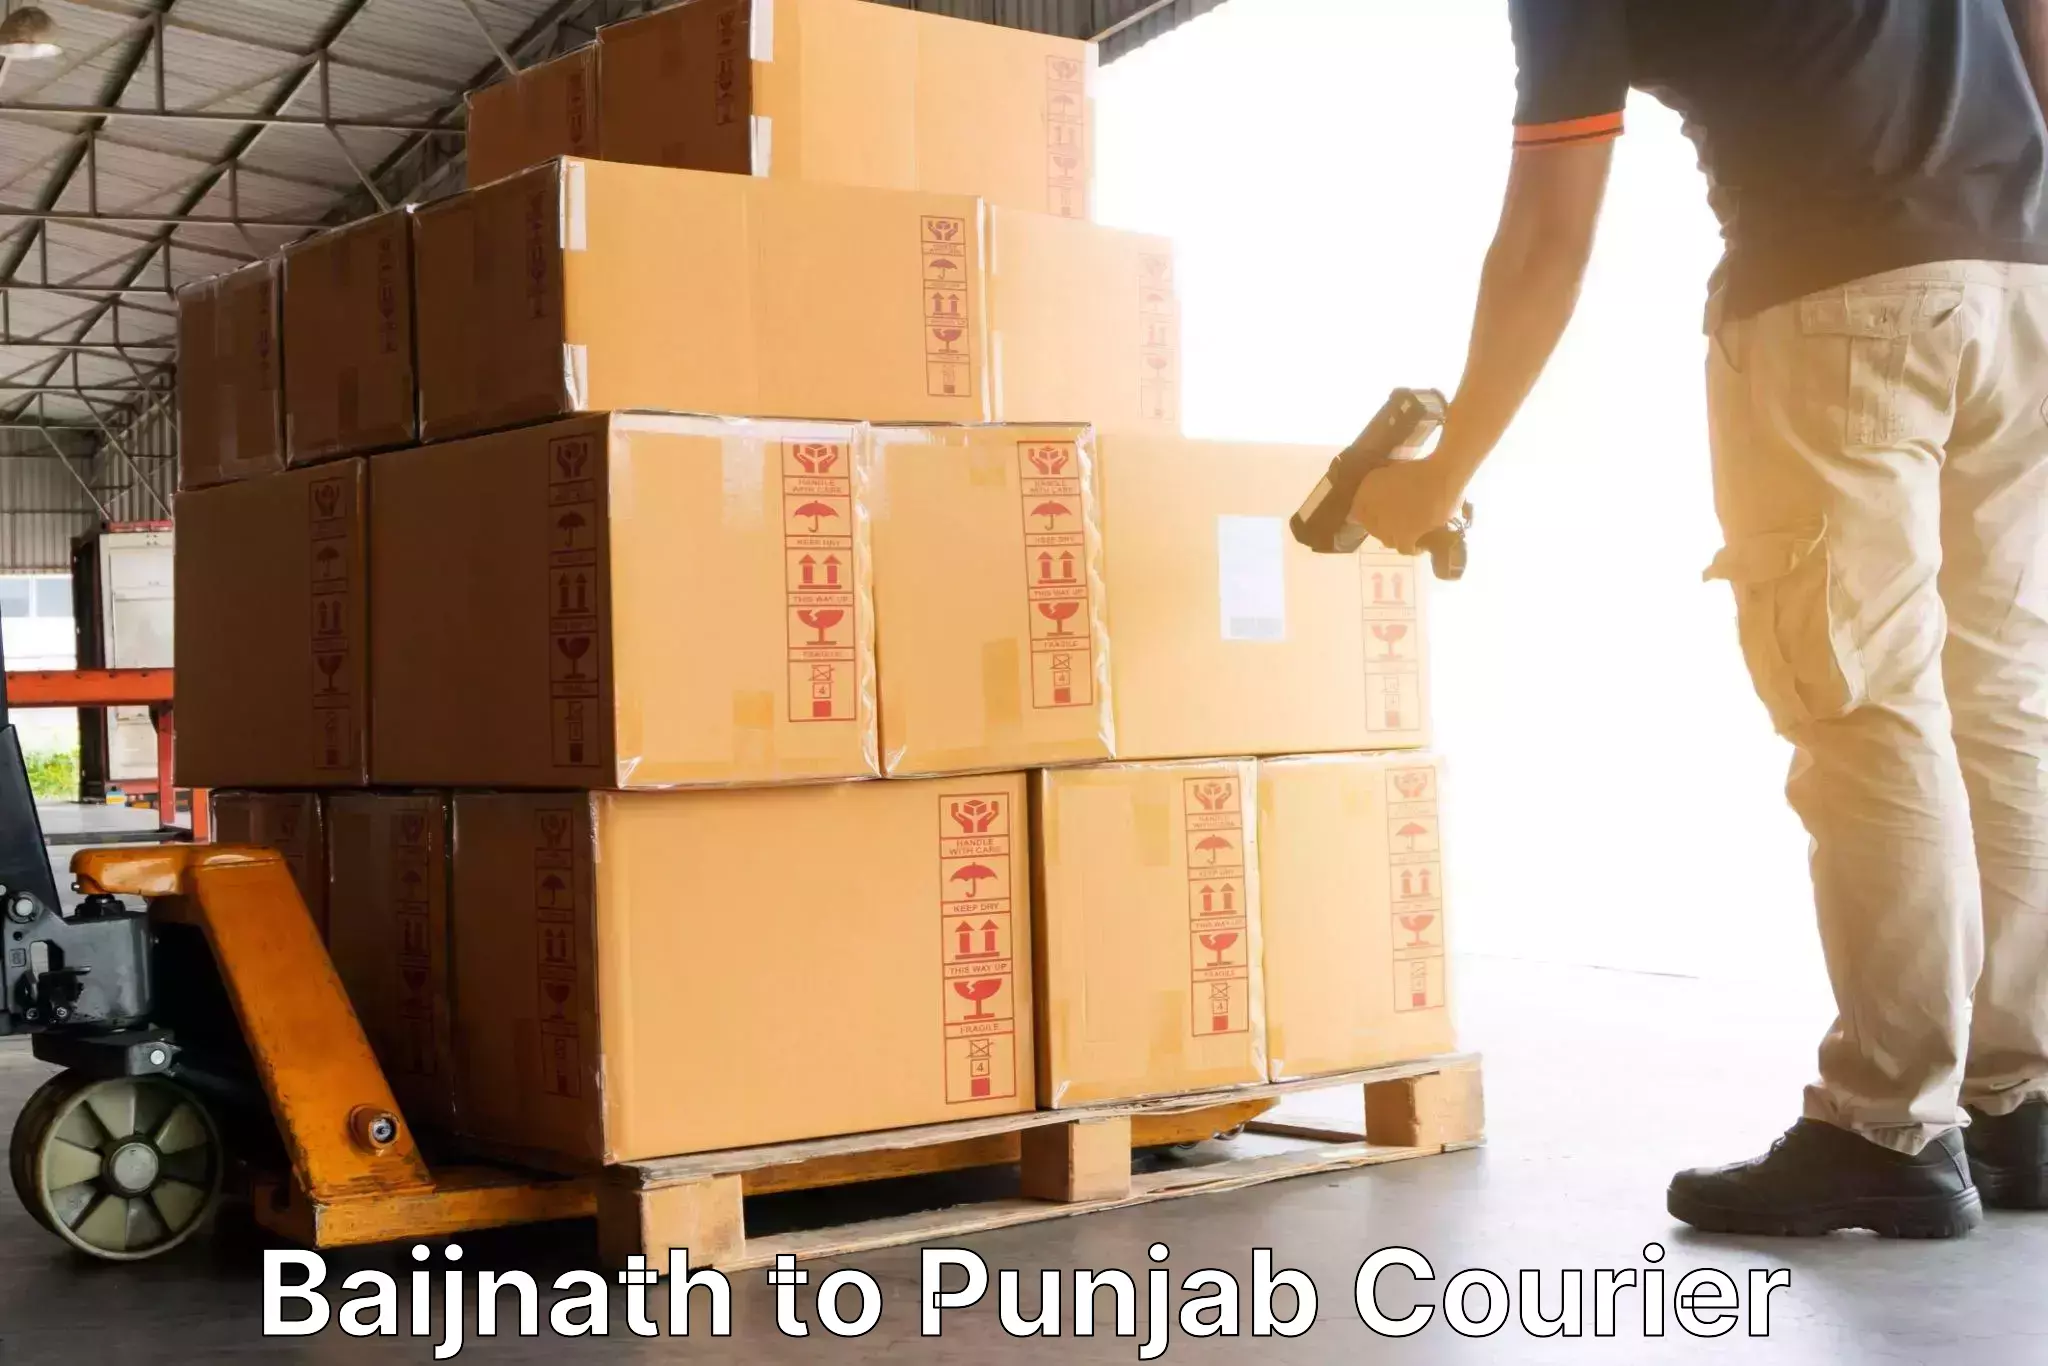 Digital courier platforms Baijnath to Punjab